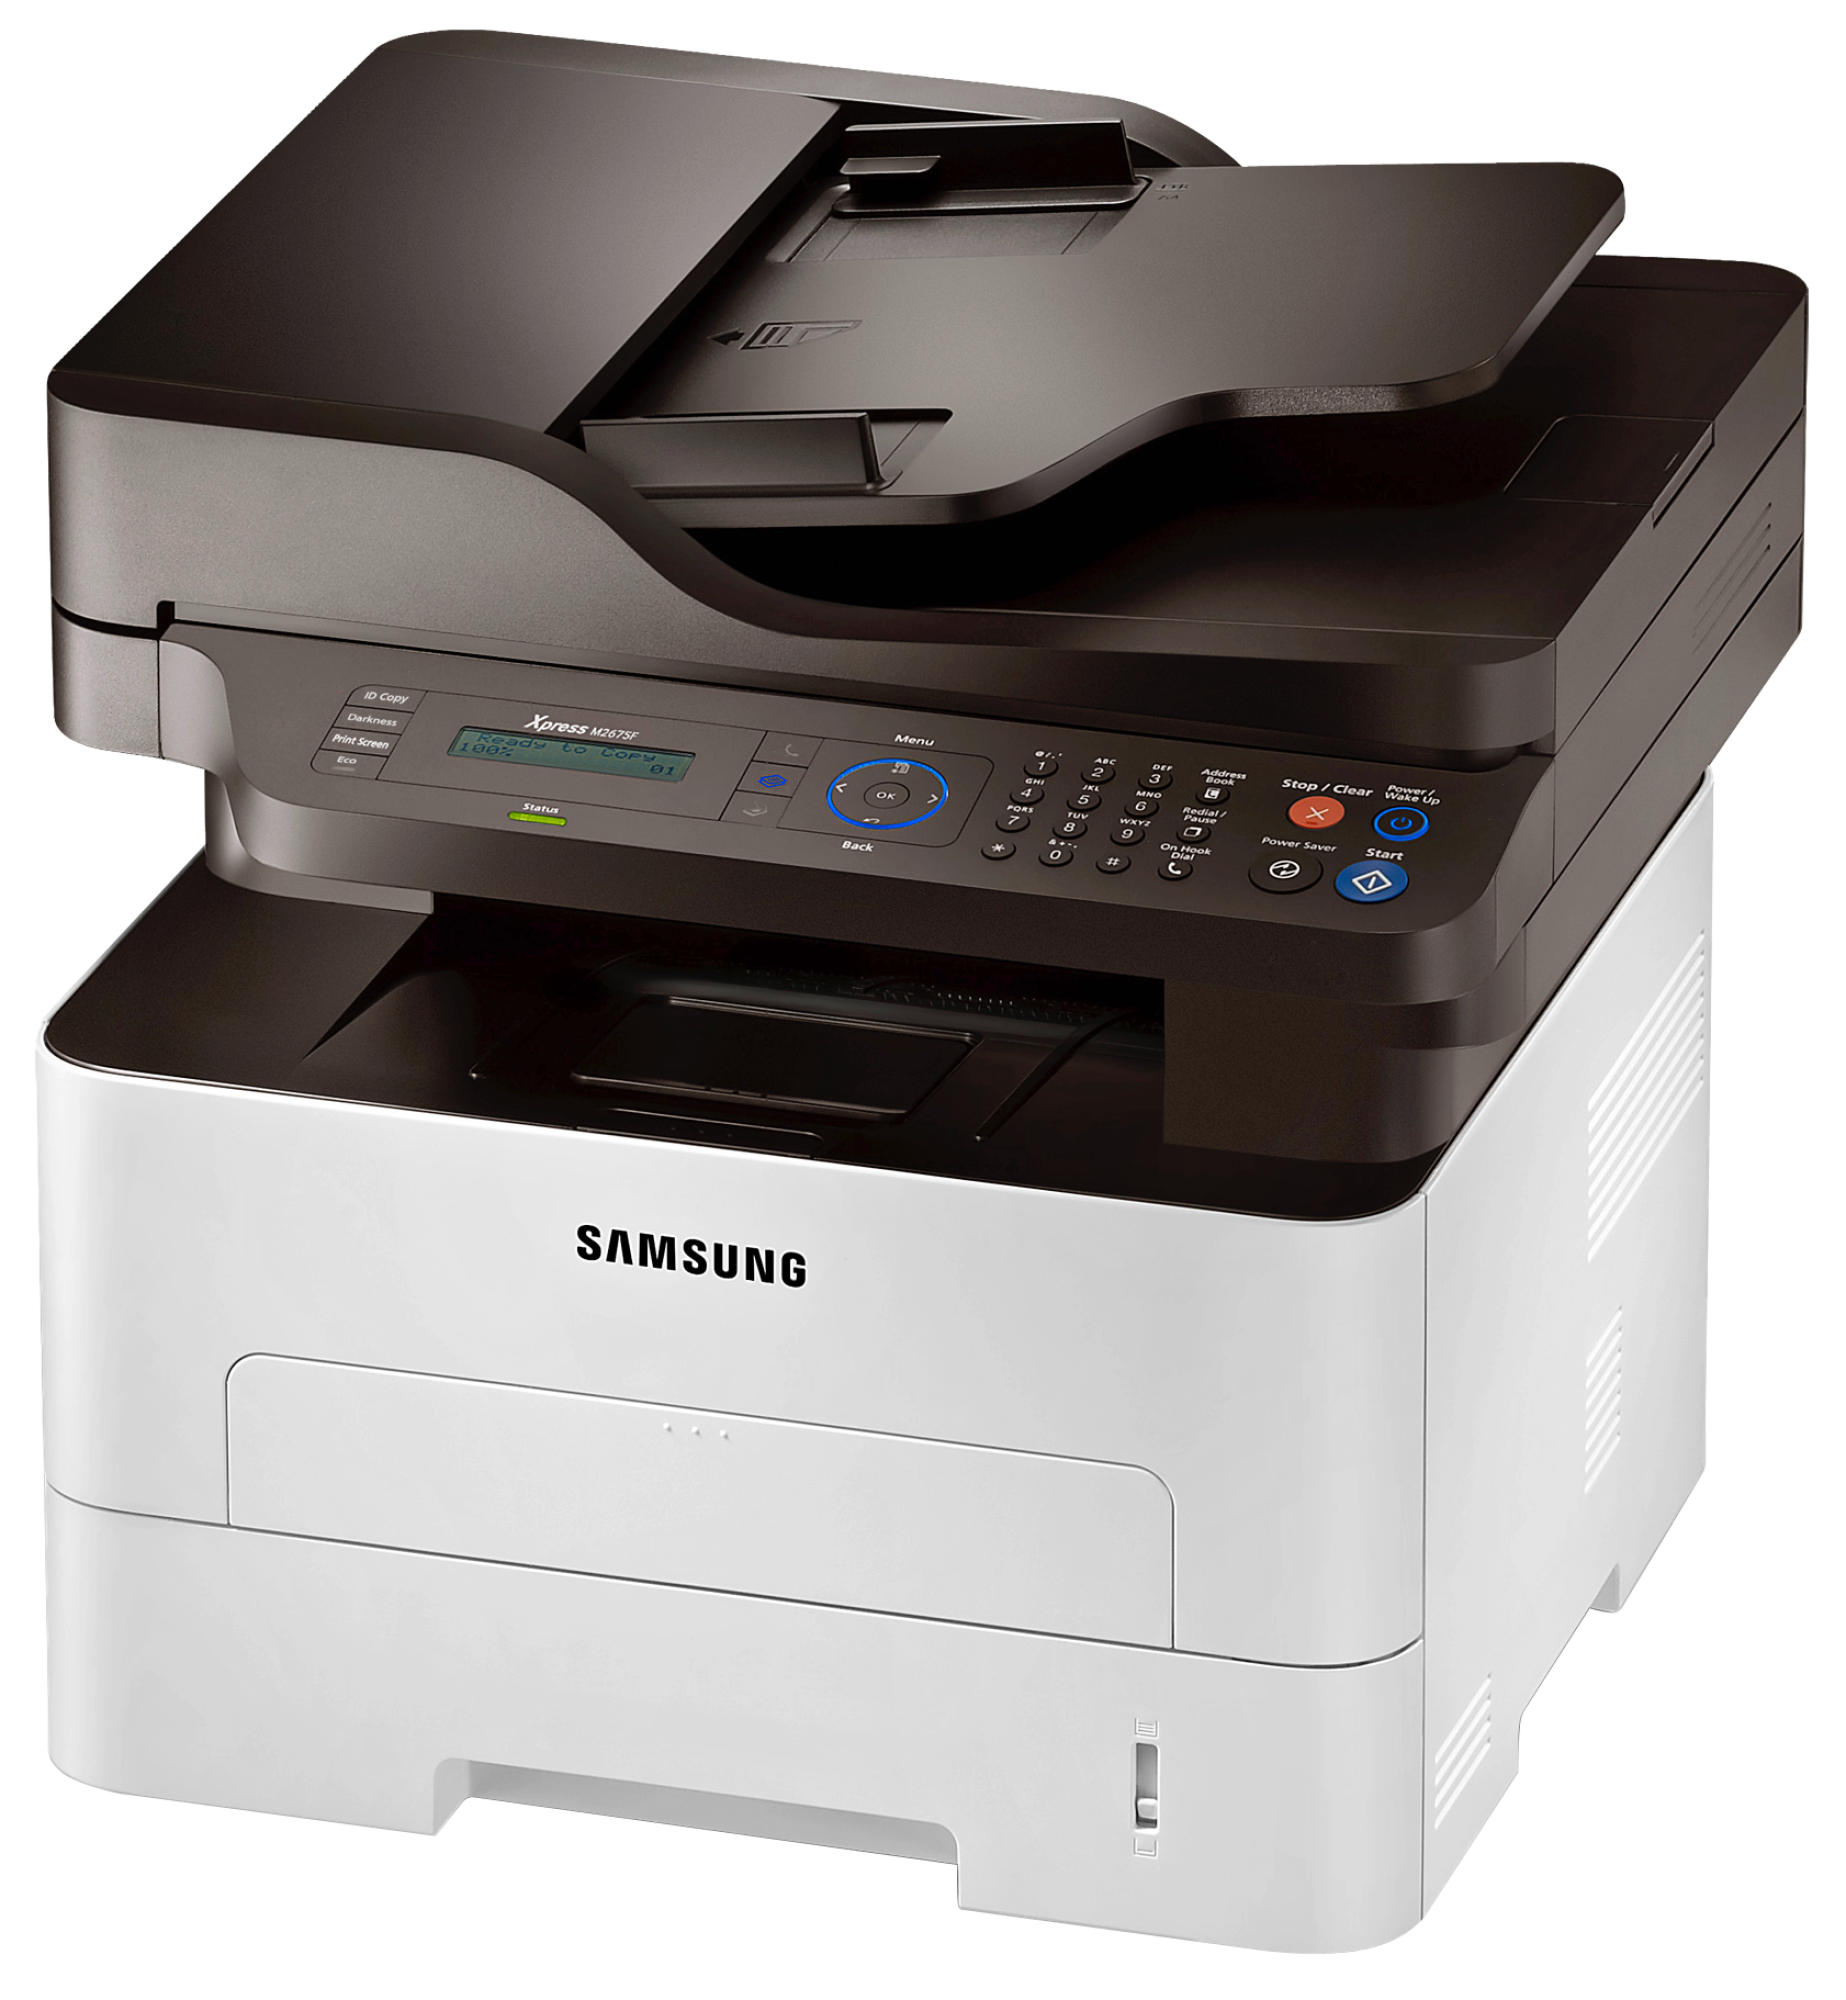 Impresora Samsung Mfp xpress slm2675f con fax y scanner hp 4020044098 laser l�ser multifunci�n